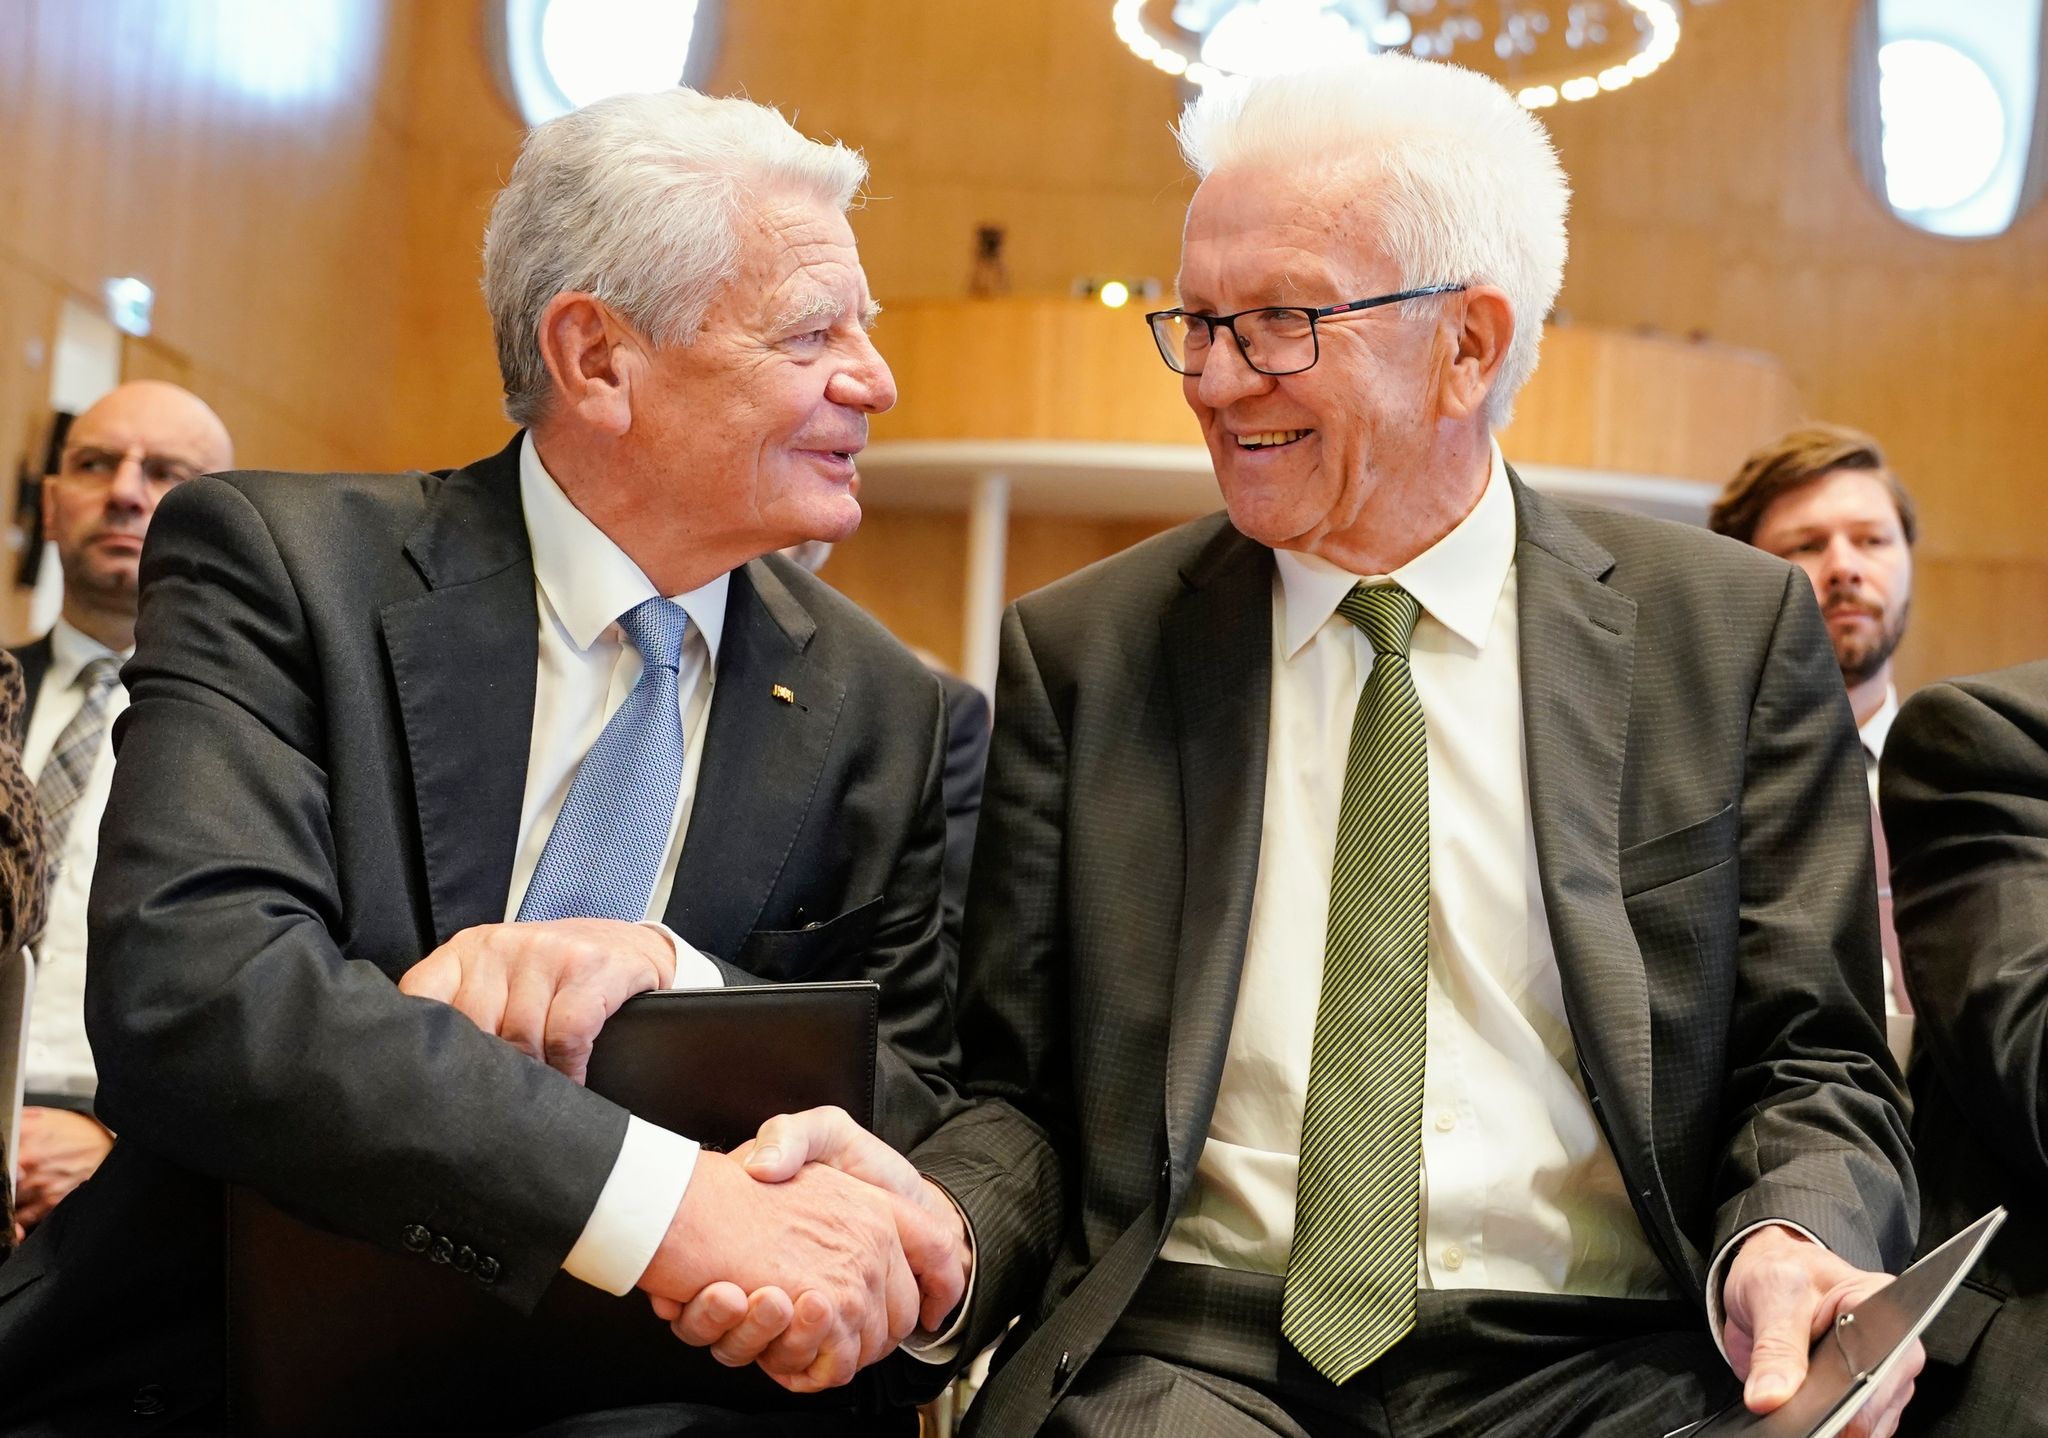 Winfried Kretschmann (r) und Joachim Gauck, ehemaliger Bundespräsident.